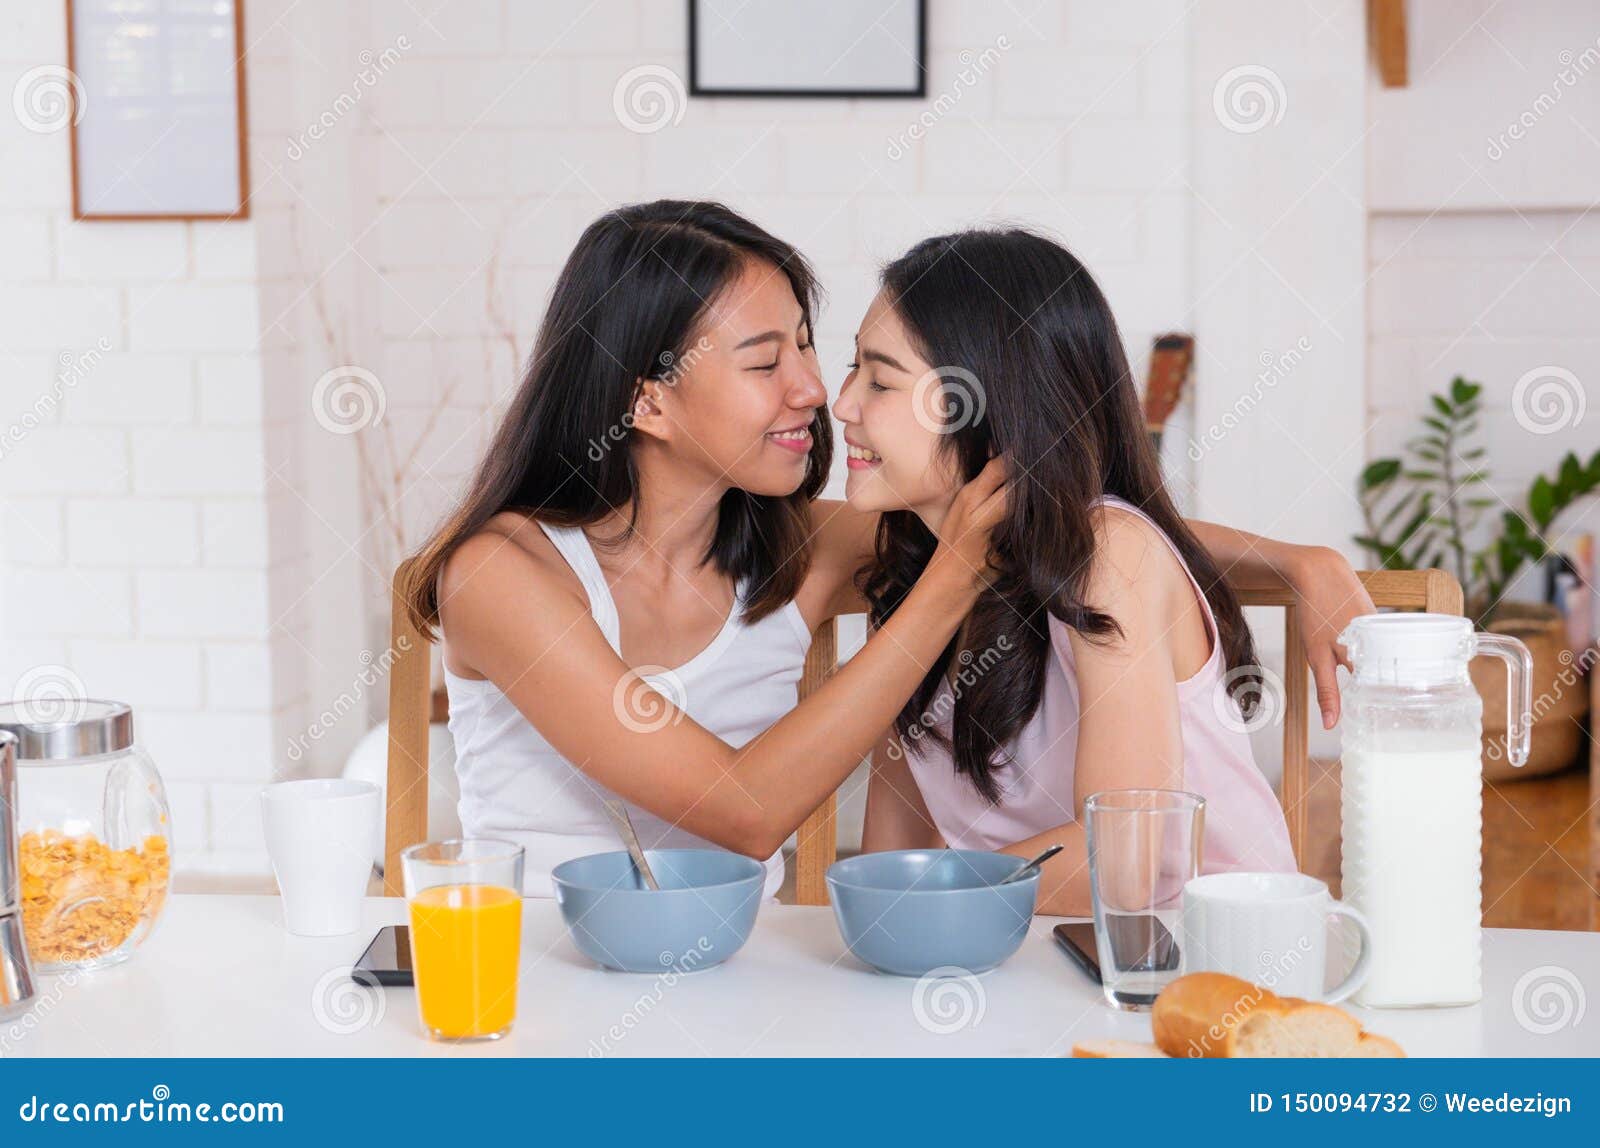 milk lesbian asian girl pic from sex video